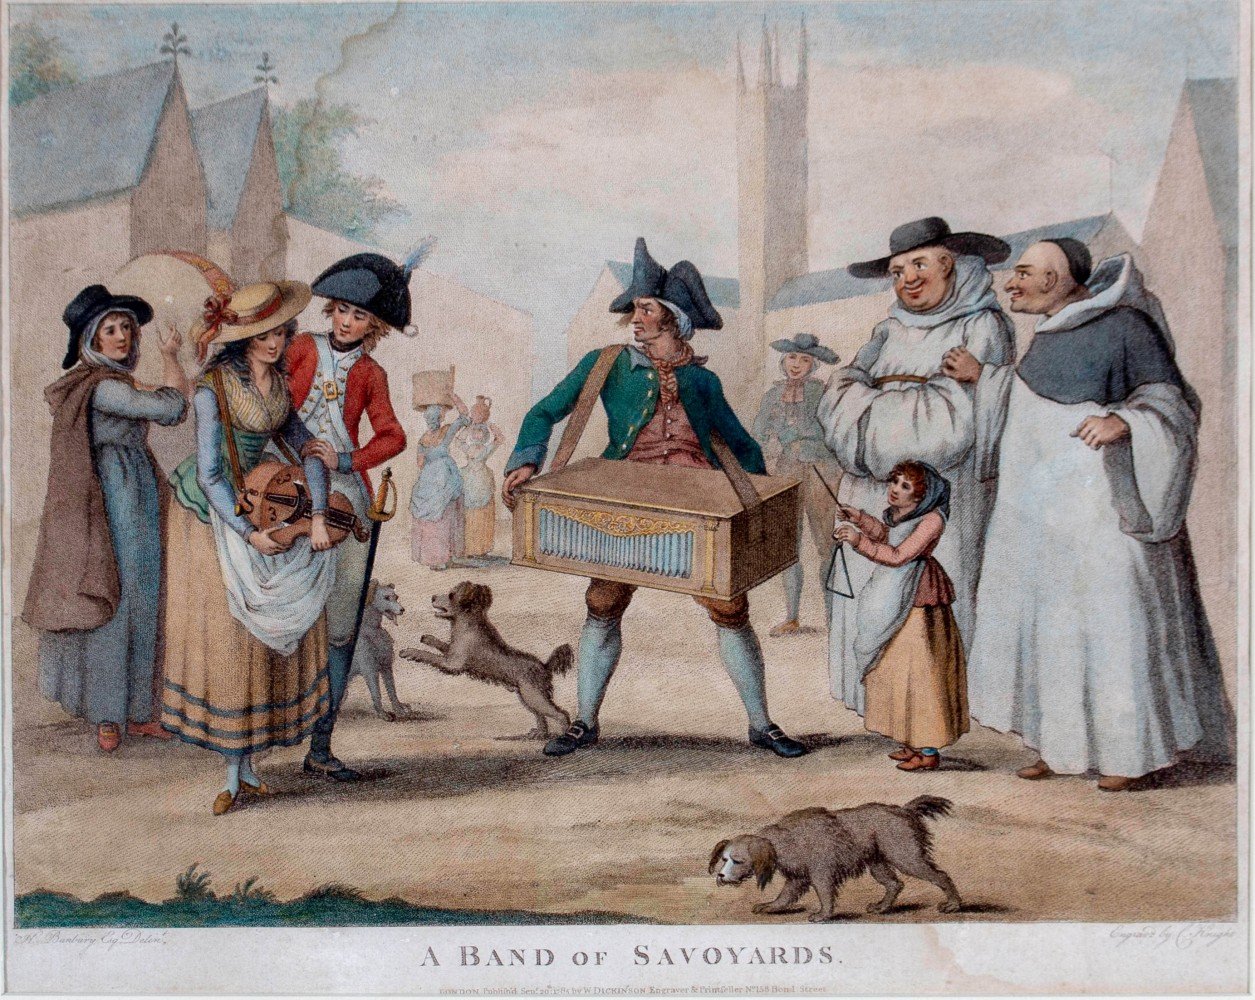 18th Century Engraving “Band of Savoyards” by H. Banbury